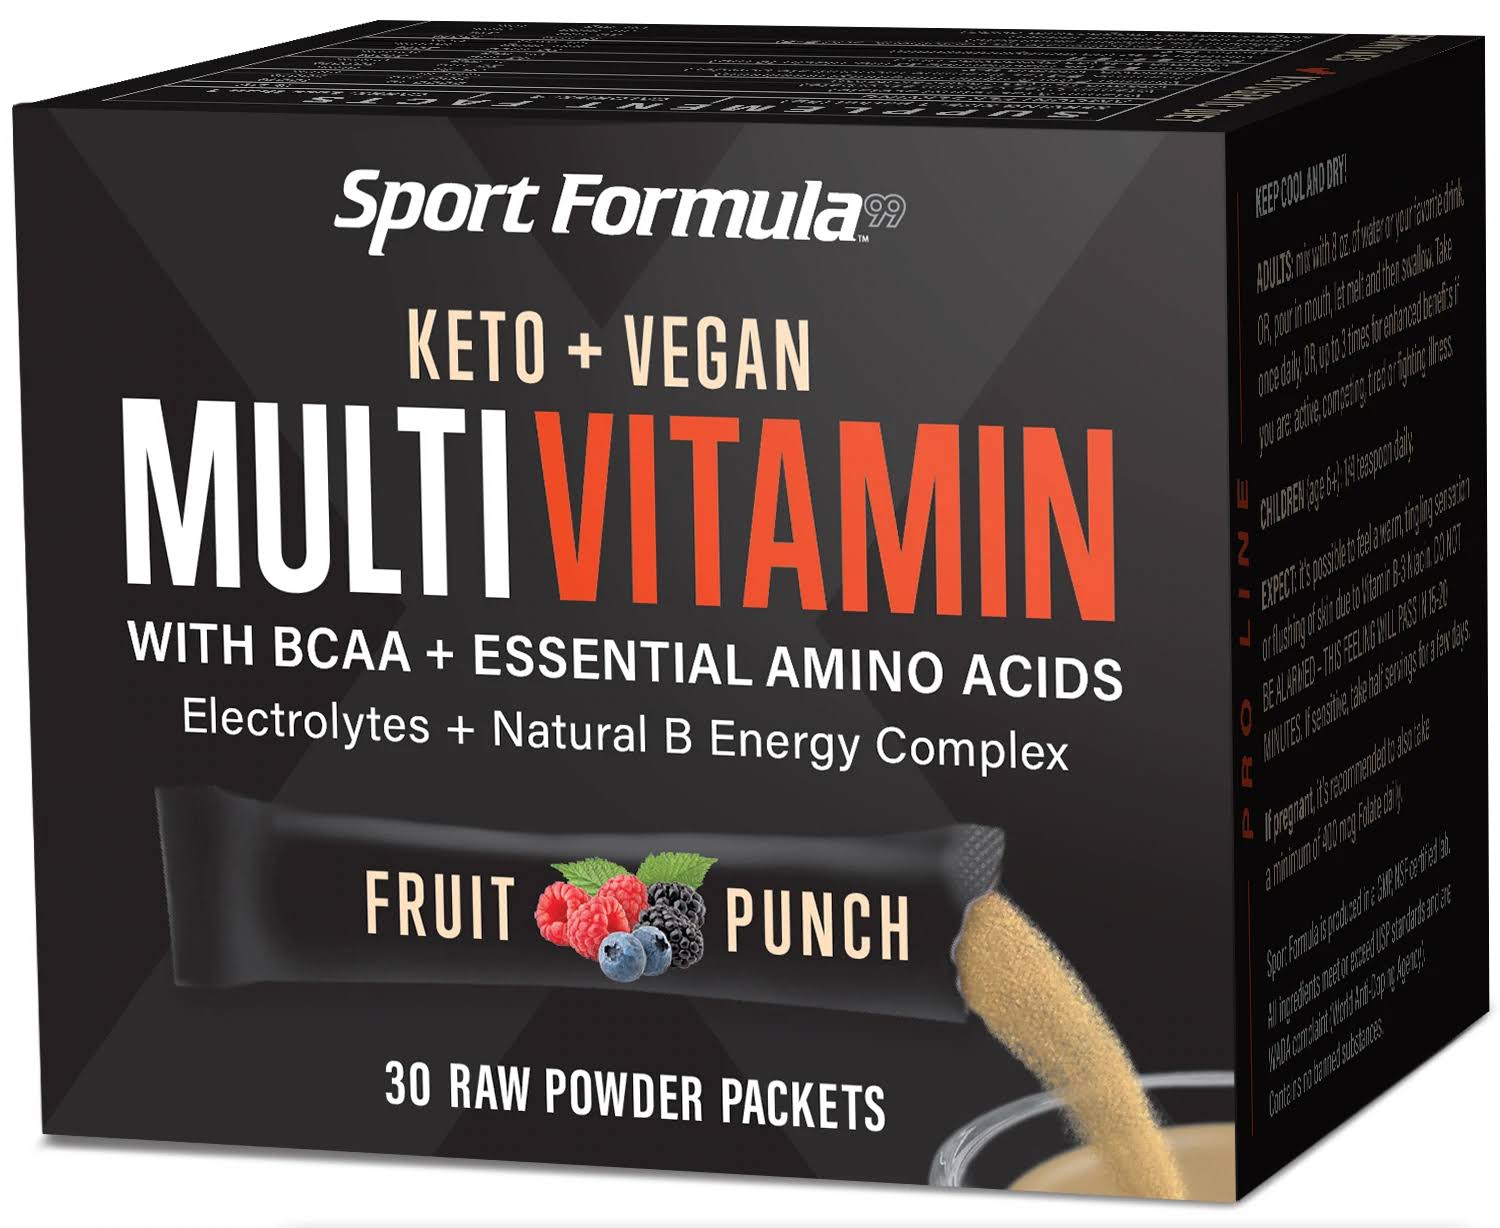 Sport Formula Powder Vitamin Packets - Fruit Punch